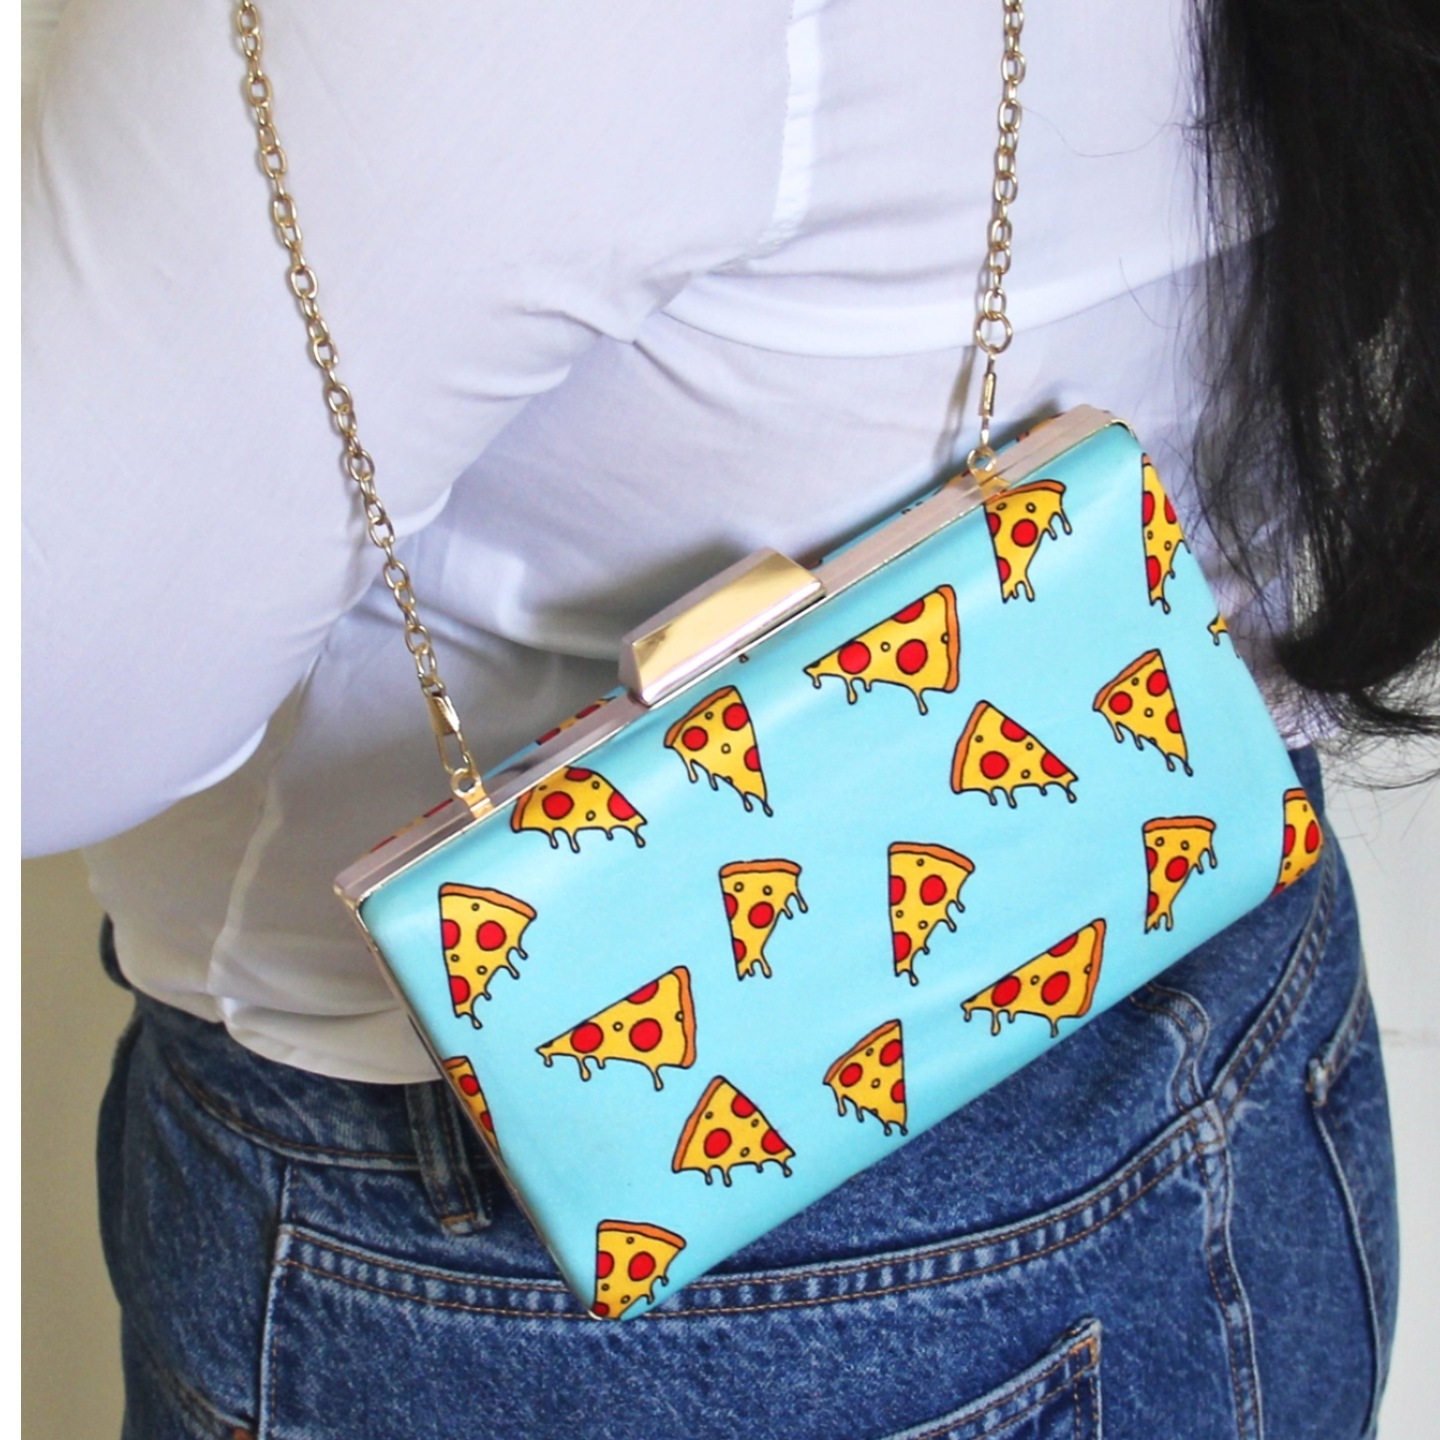 Qurirky Pizza Printed Clutch Bag